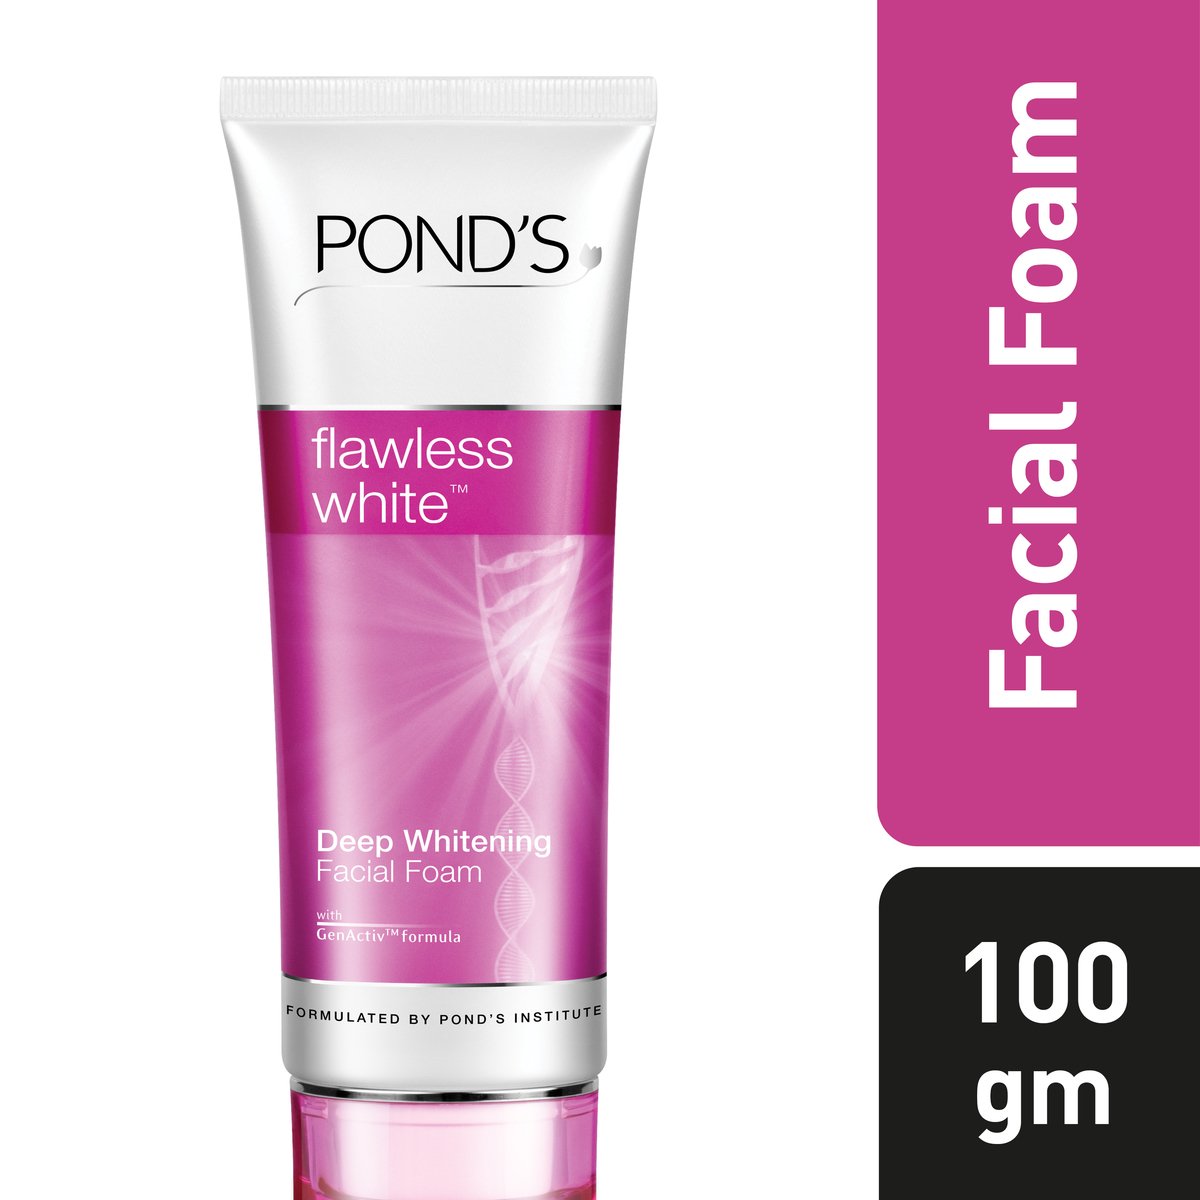 Pond's Flawless White Facial Foam100 g